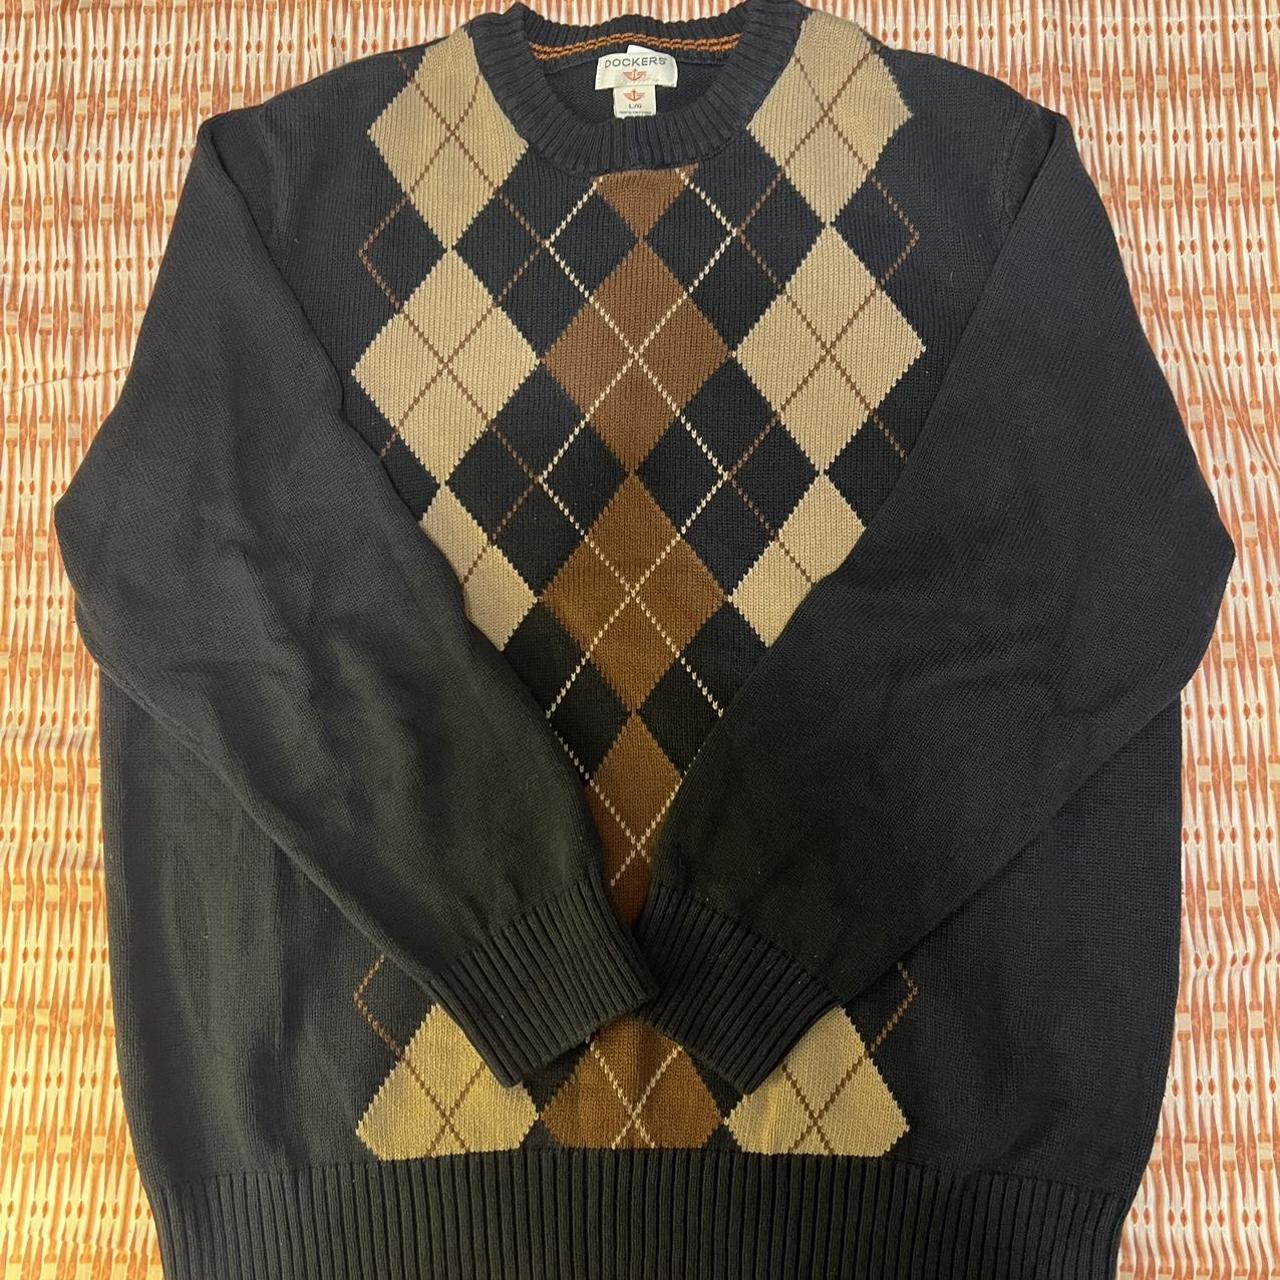 Dockers sweater Color: navy, cream & brown Size L - Depop